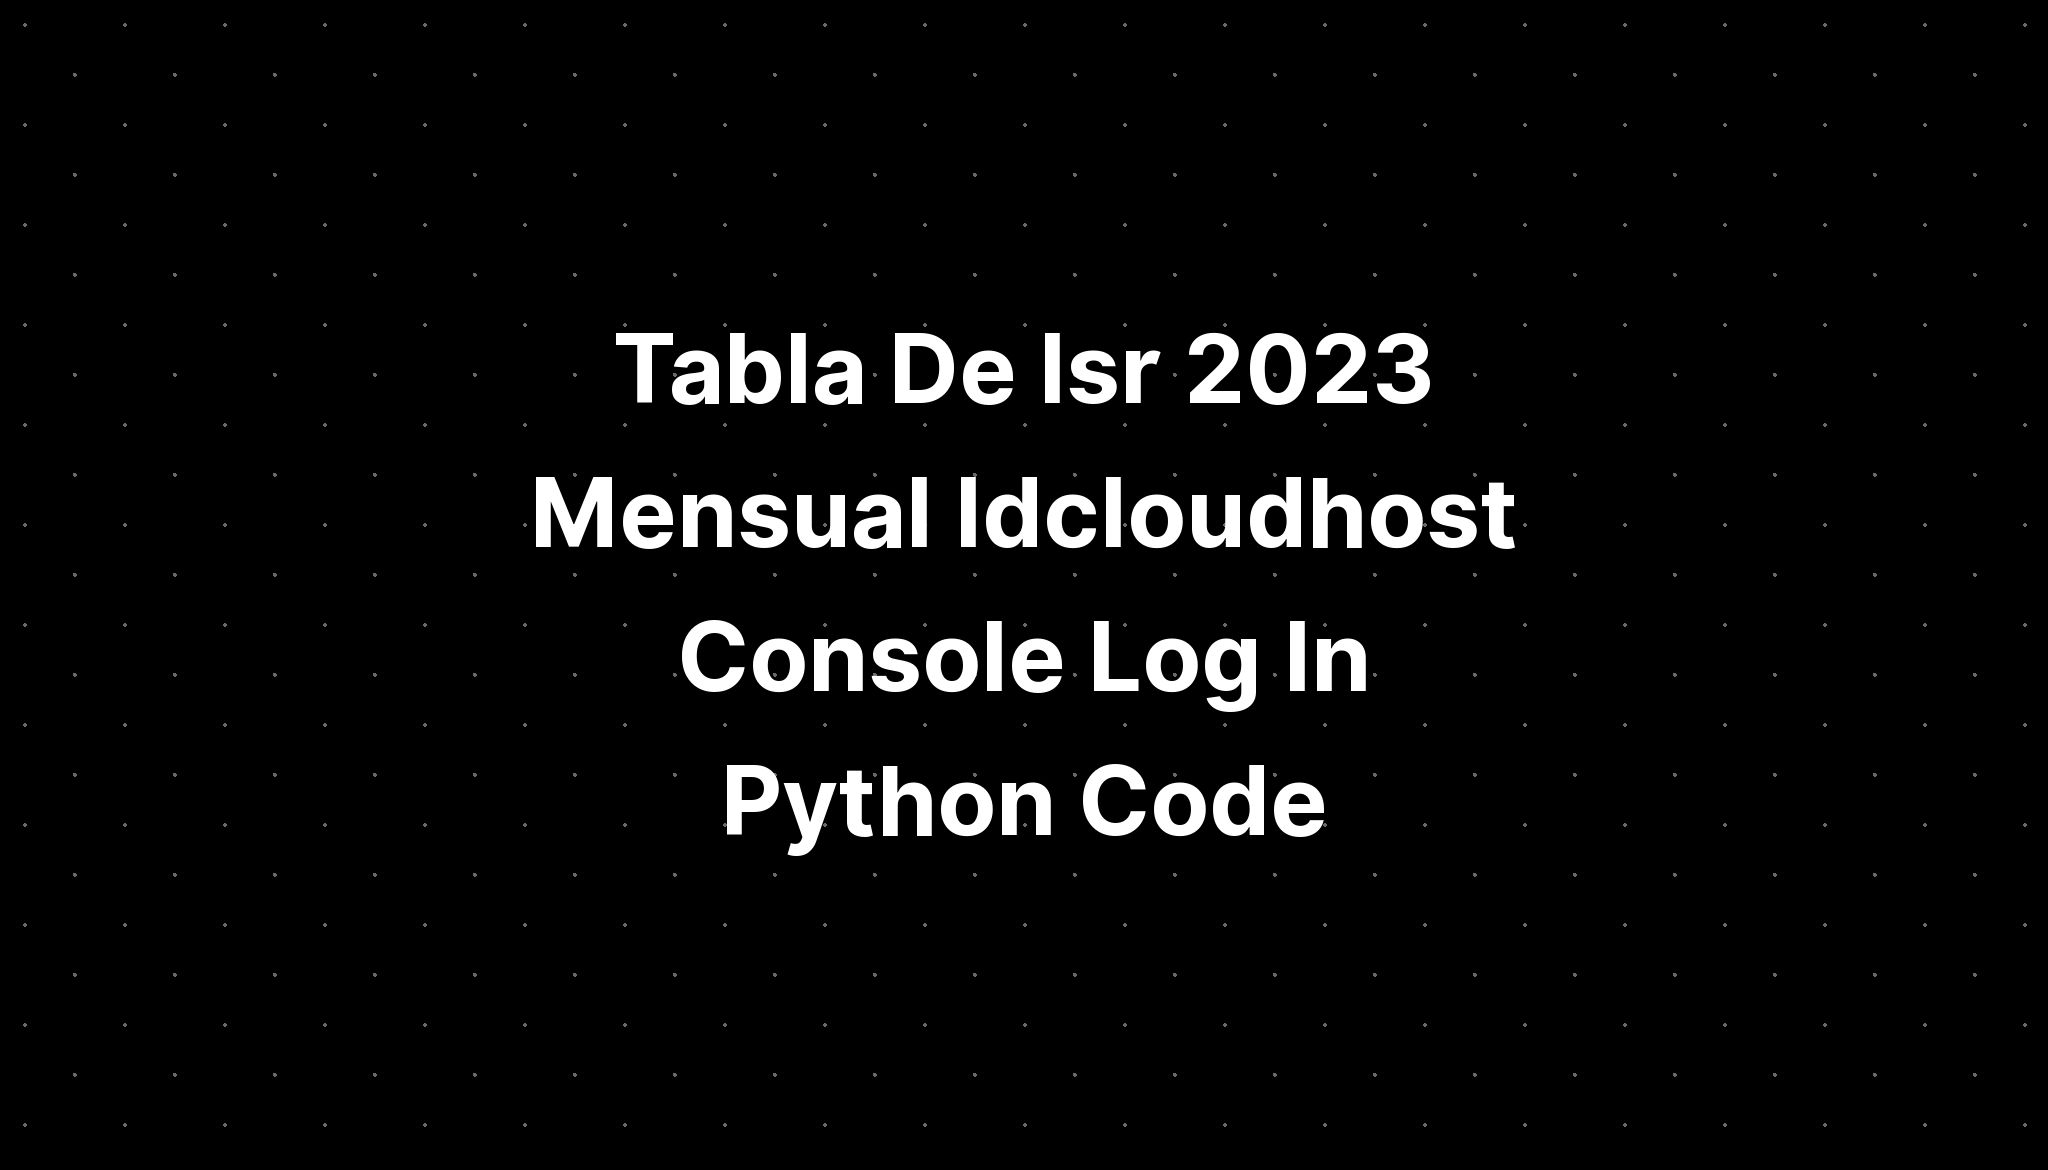 Tabla De Isr 2023 Mensual Idcloudhost Console Log In 5979